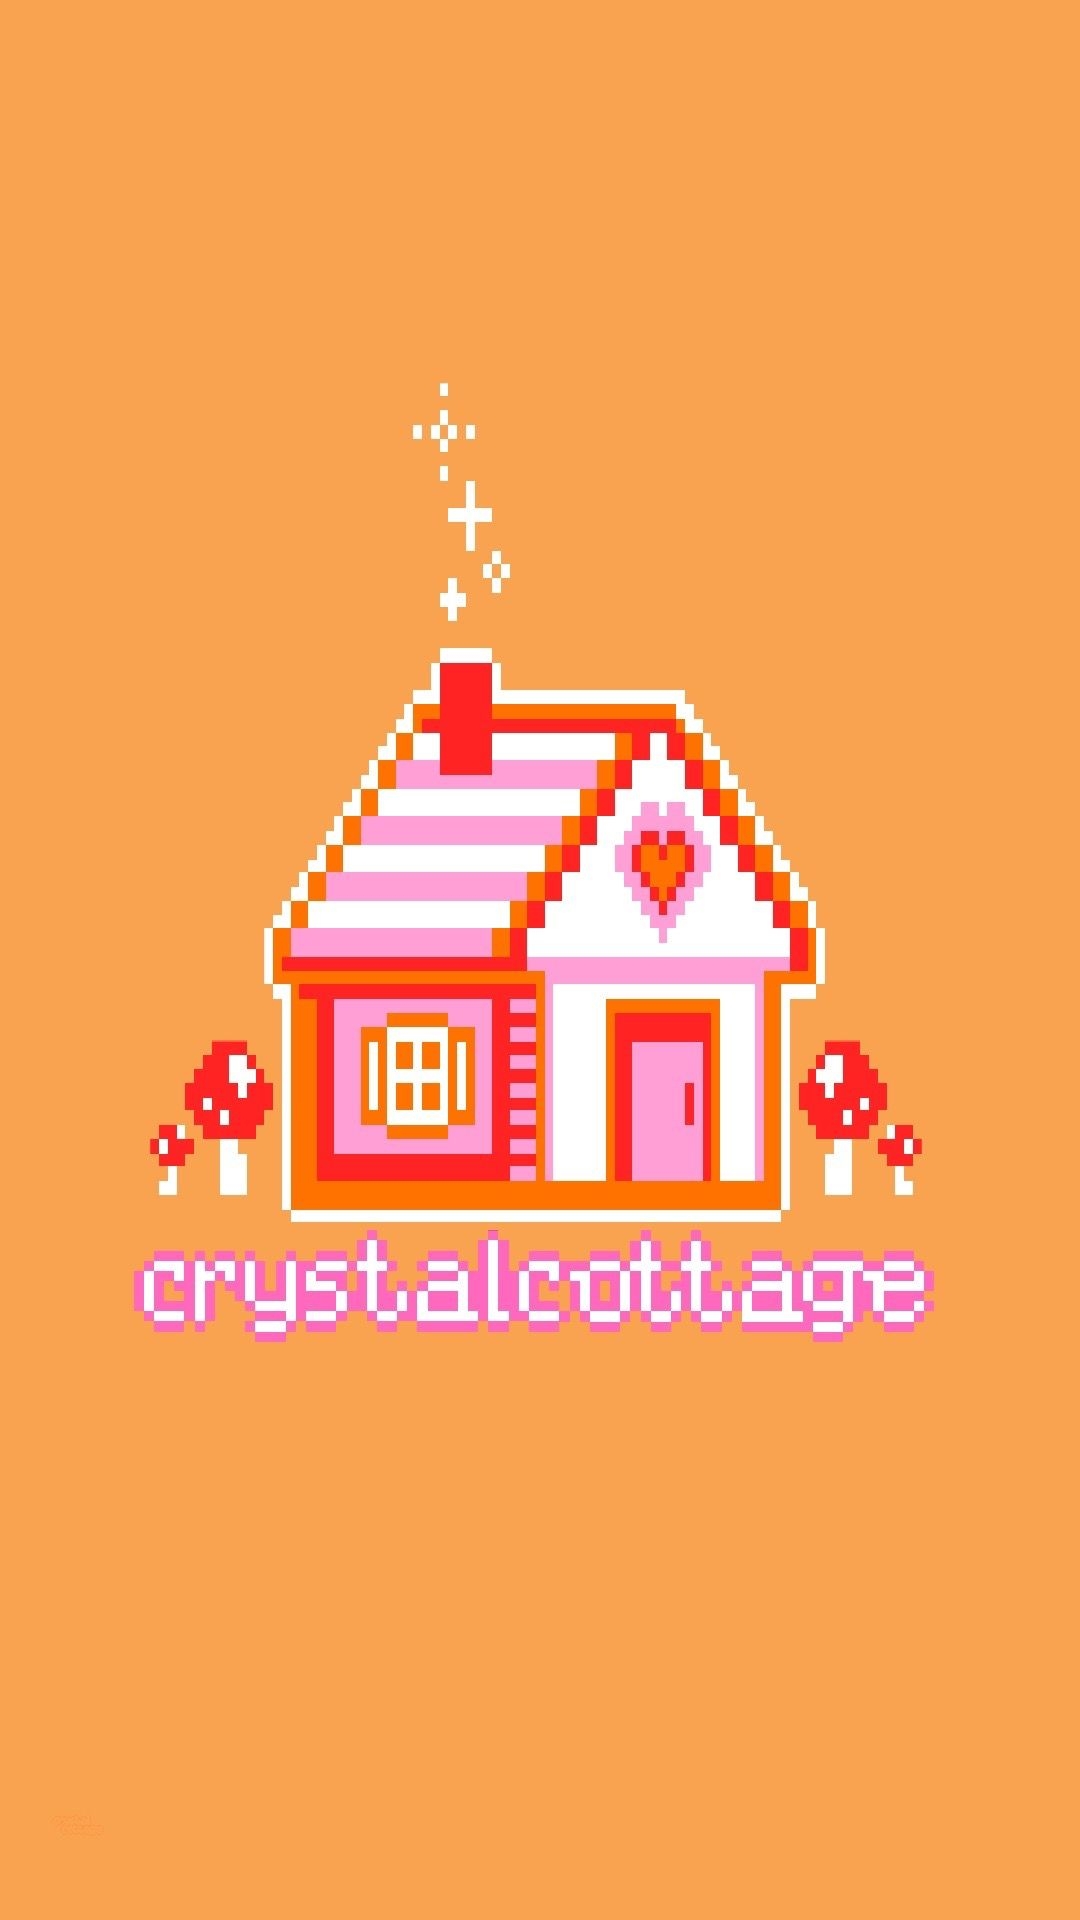 Crystal Cottage Art